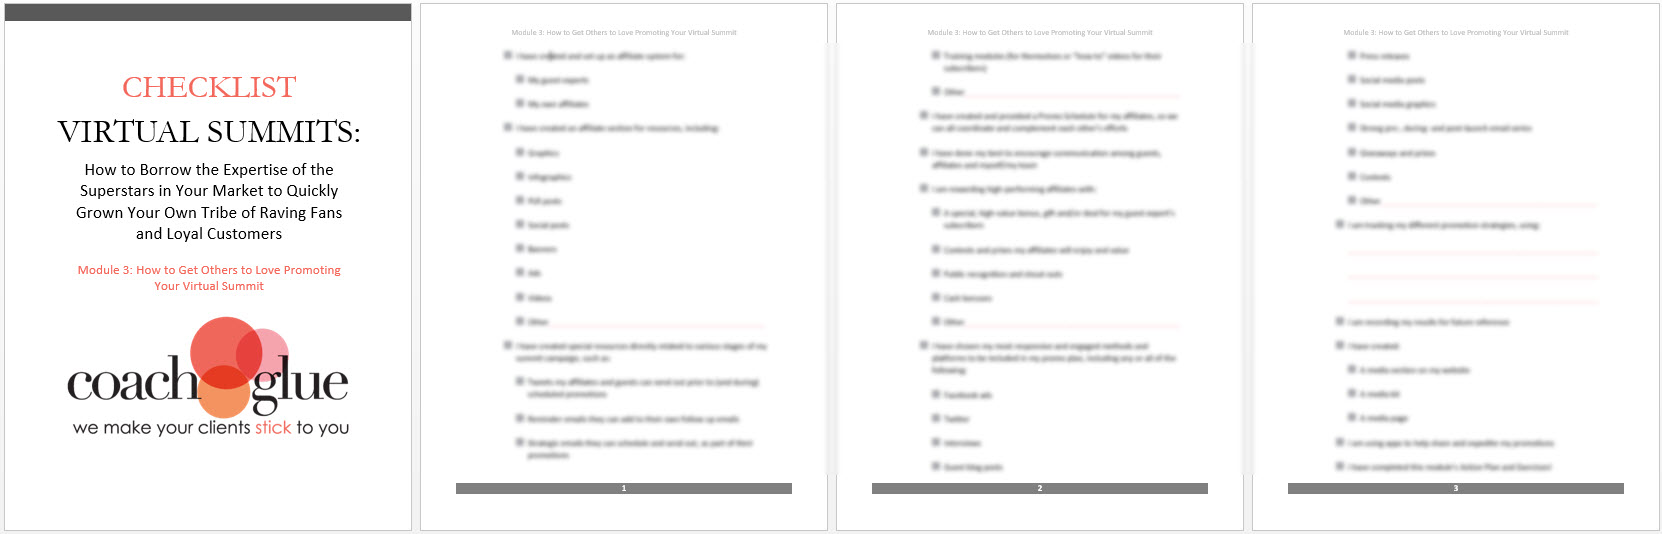 module 3 checklist